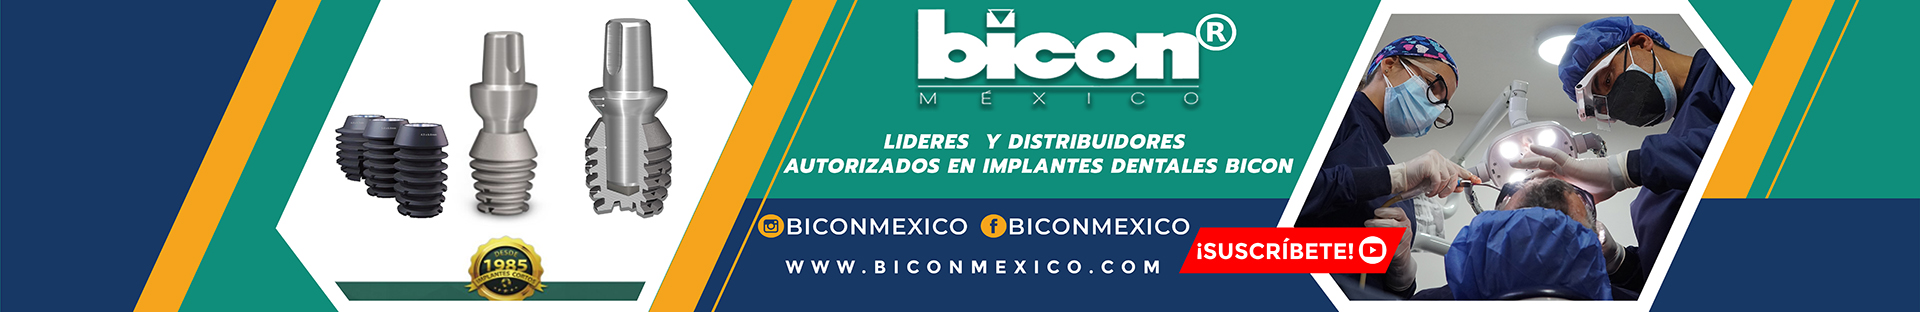 https://biconmexico.com/wp-content/uploads/2021/08/website-blog-banner.jpg